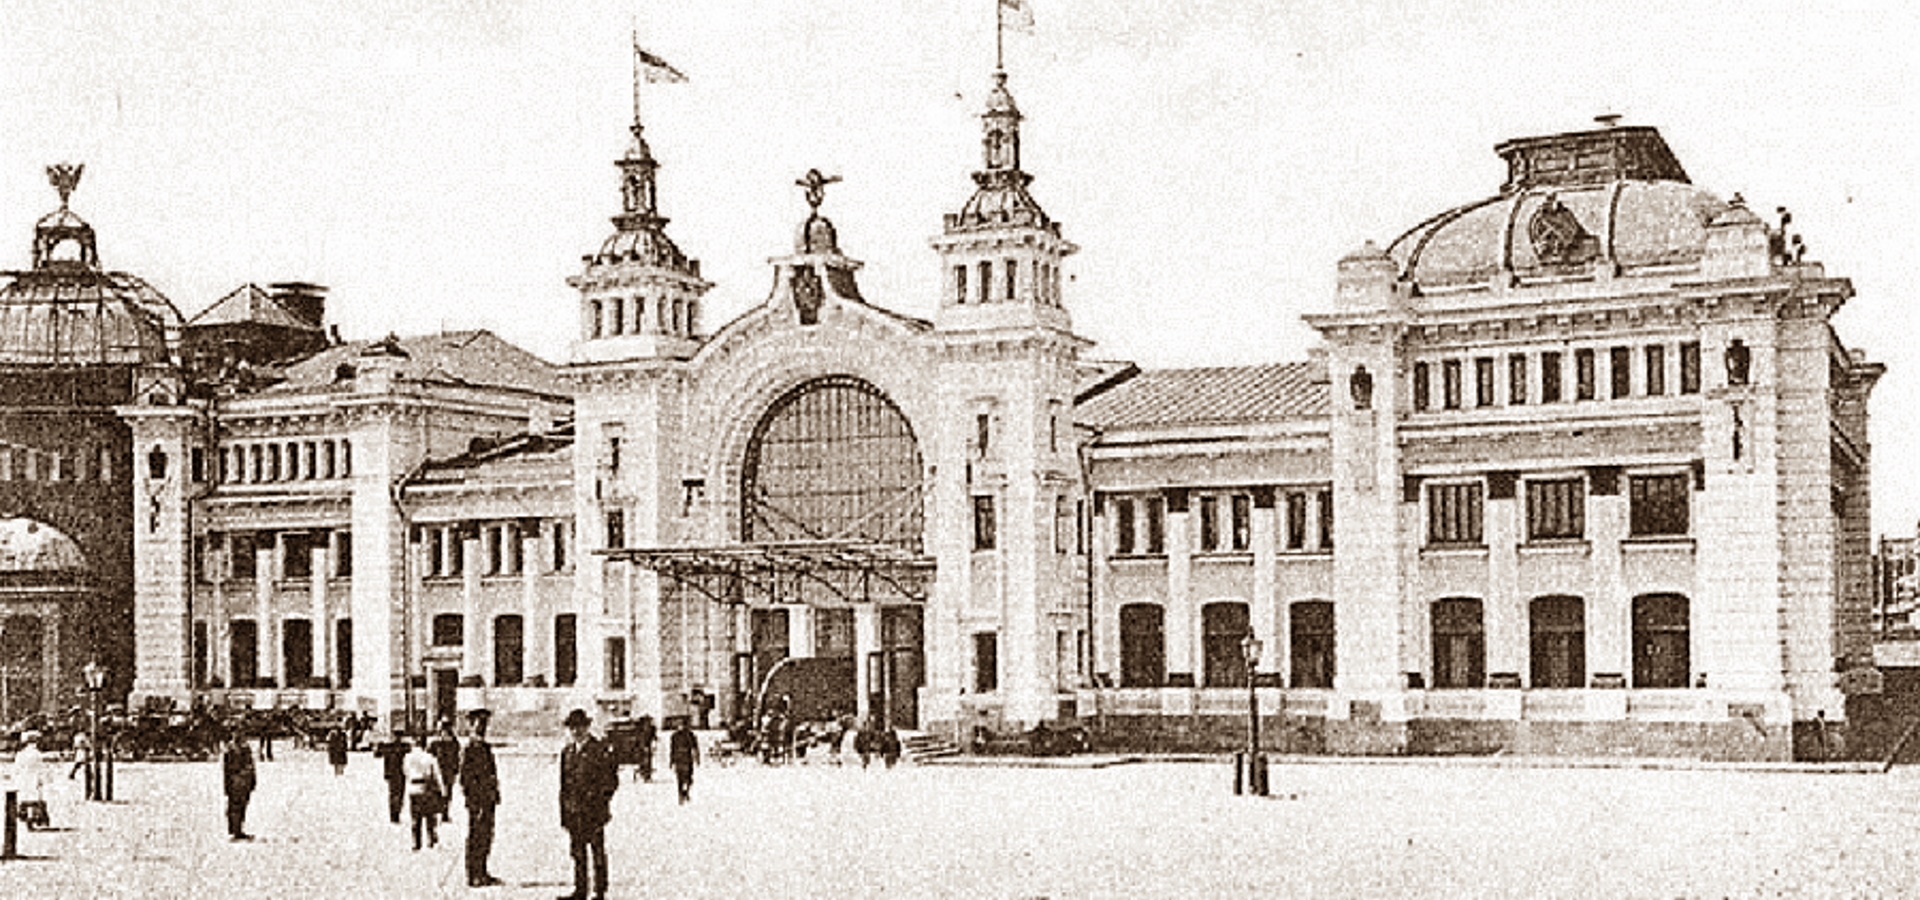 балтийский вокзал старые